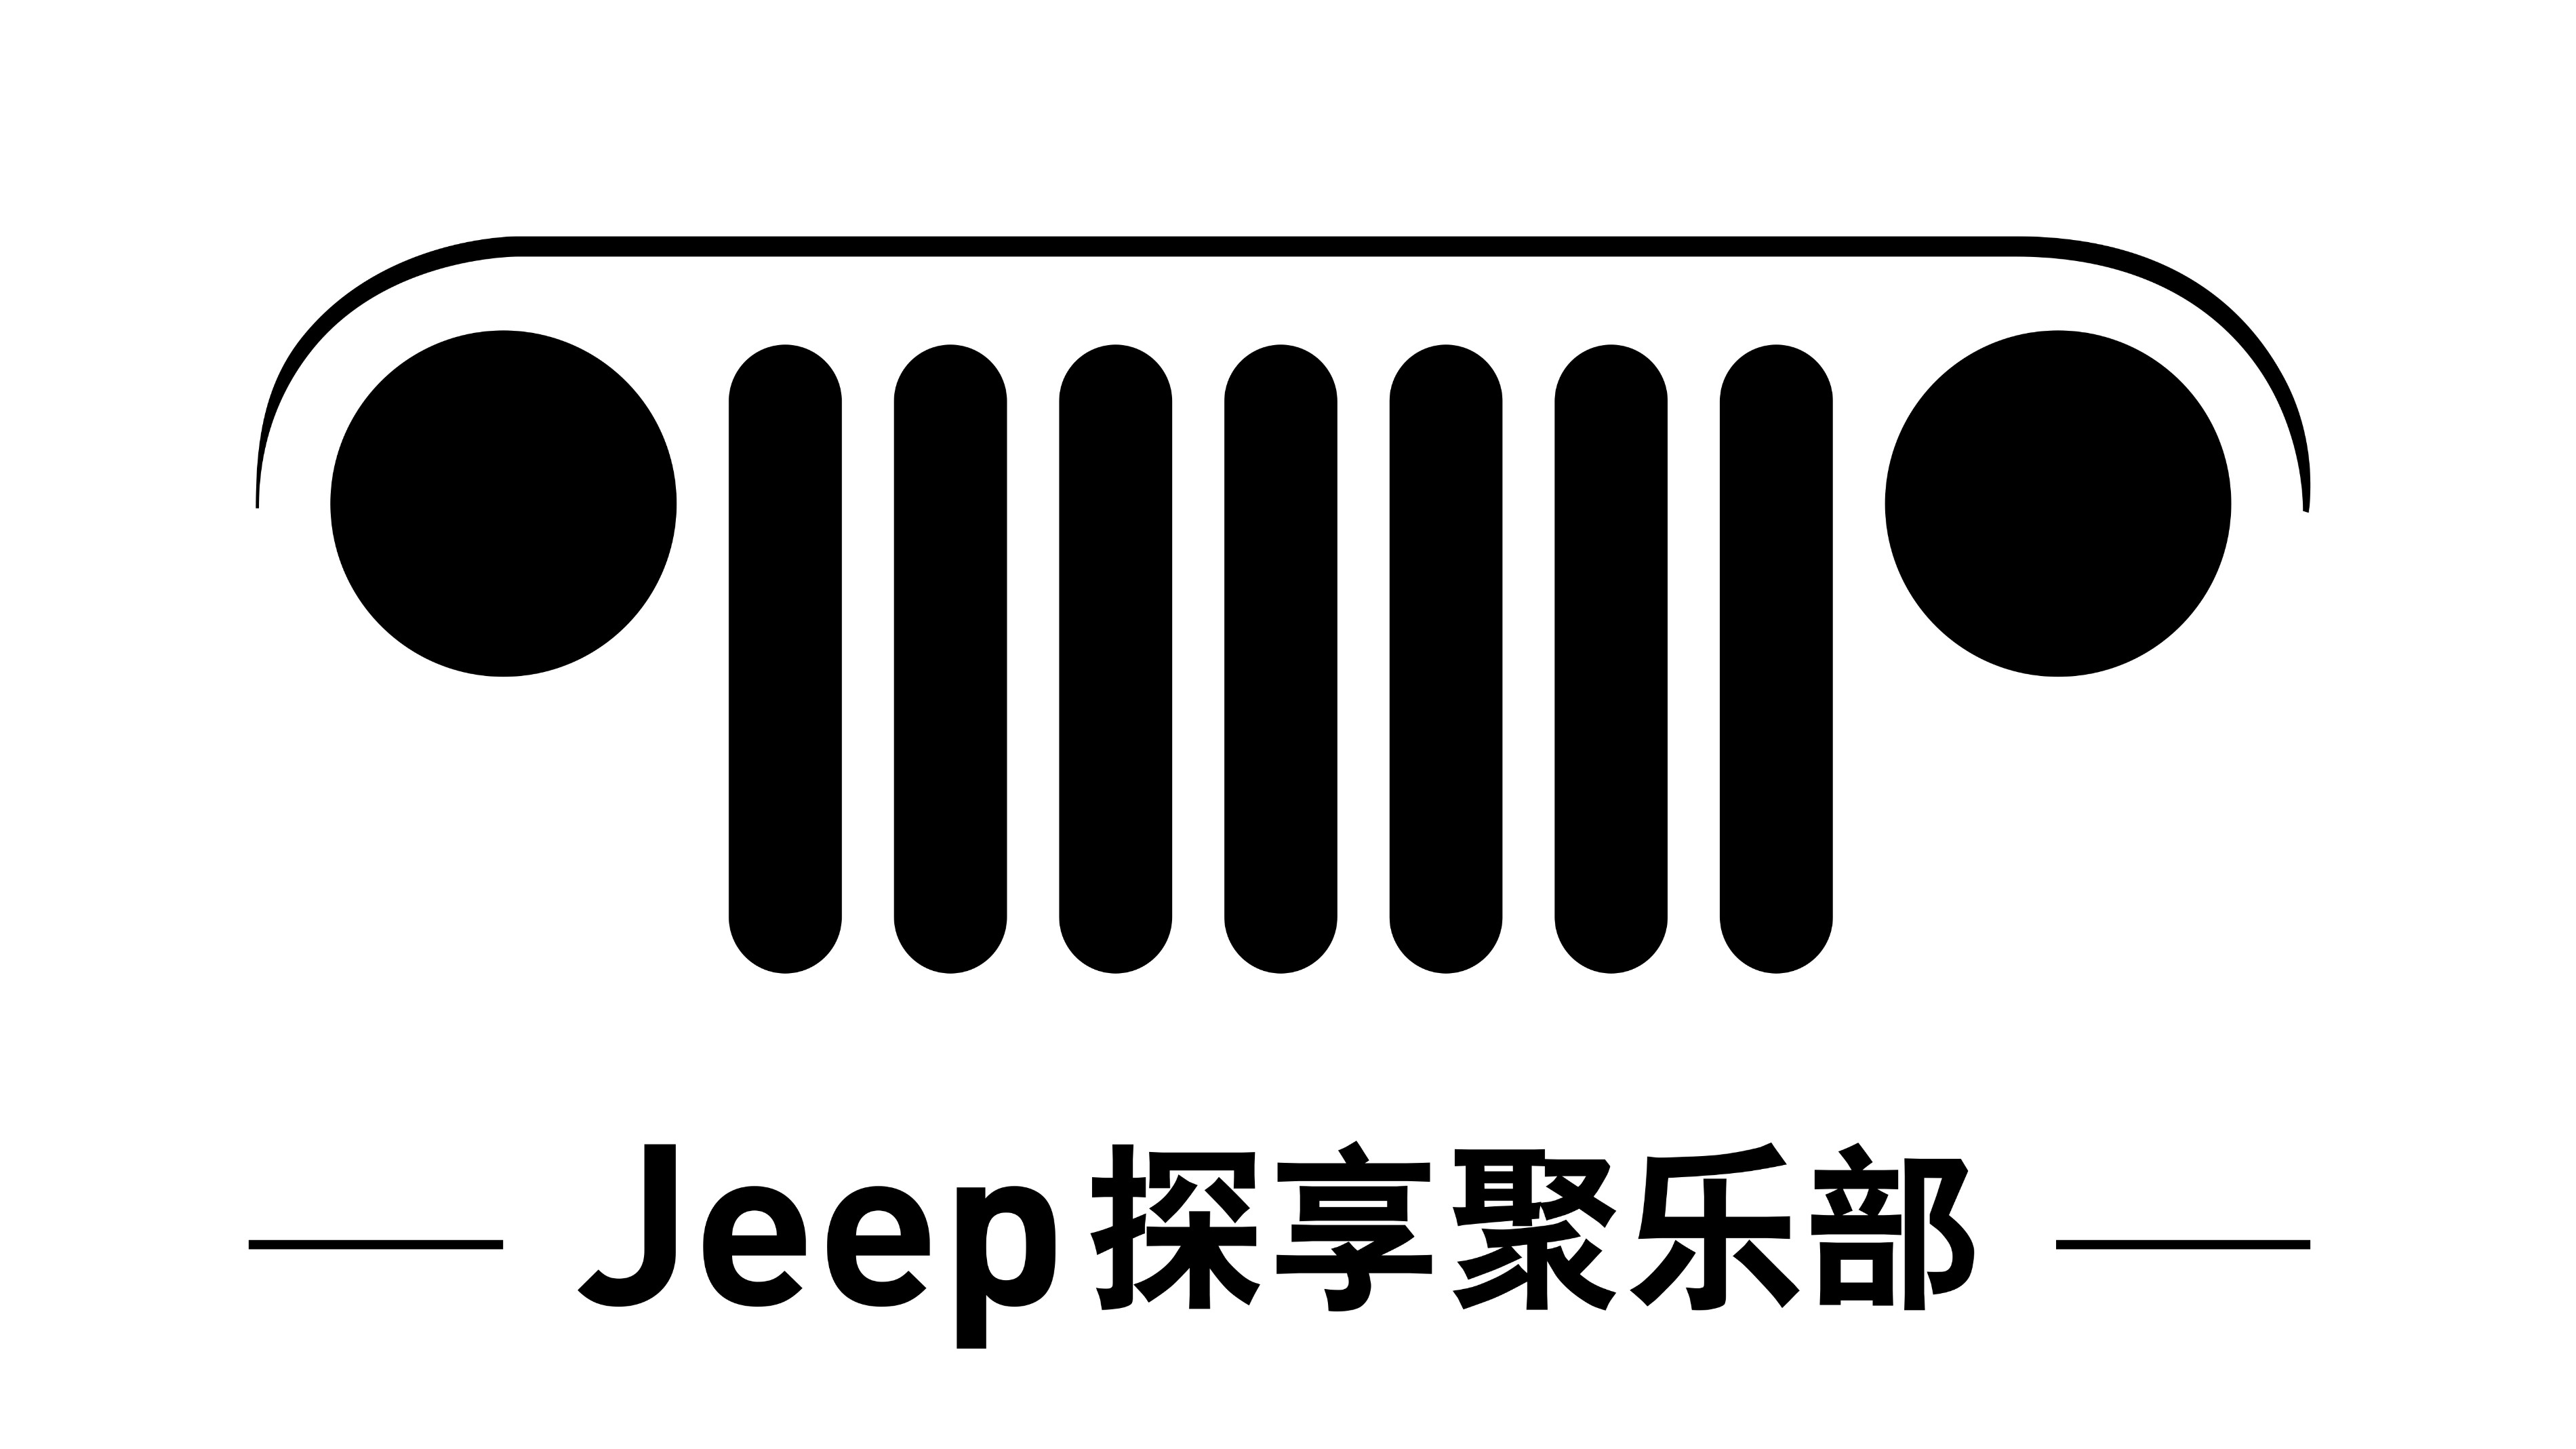 Jeep 穿越撒哈拉精华片